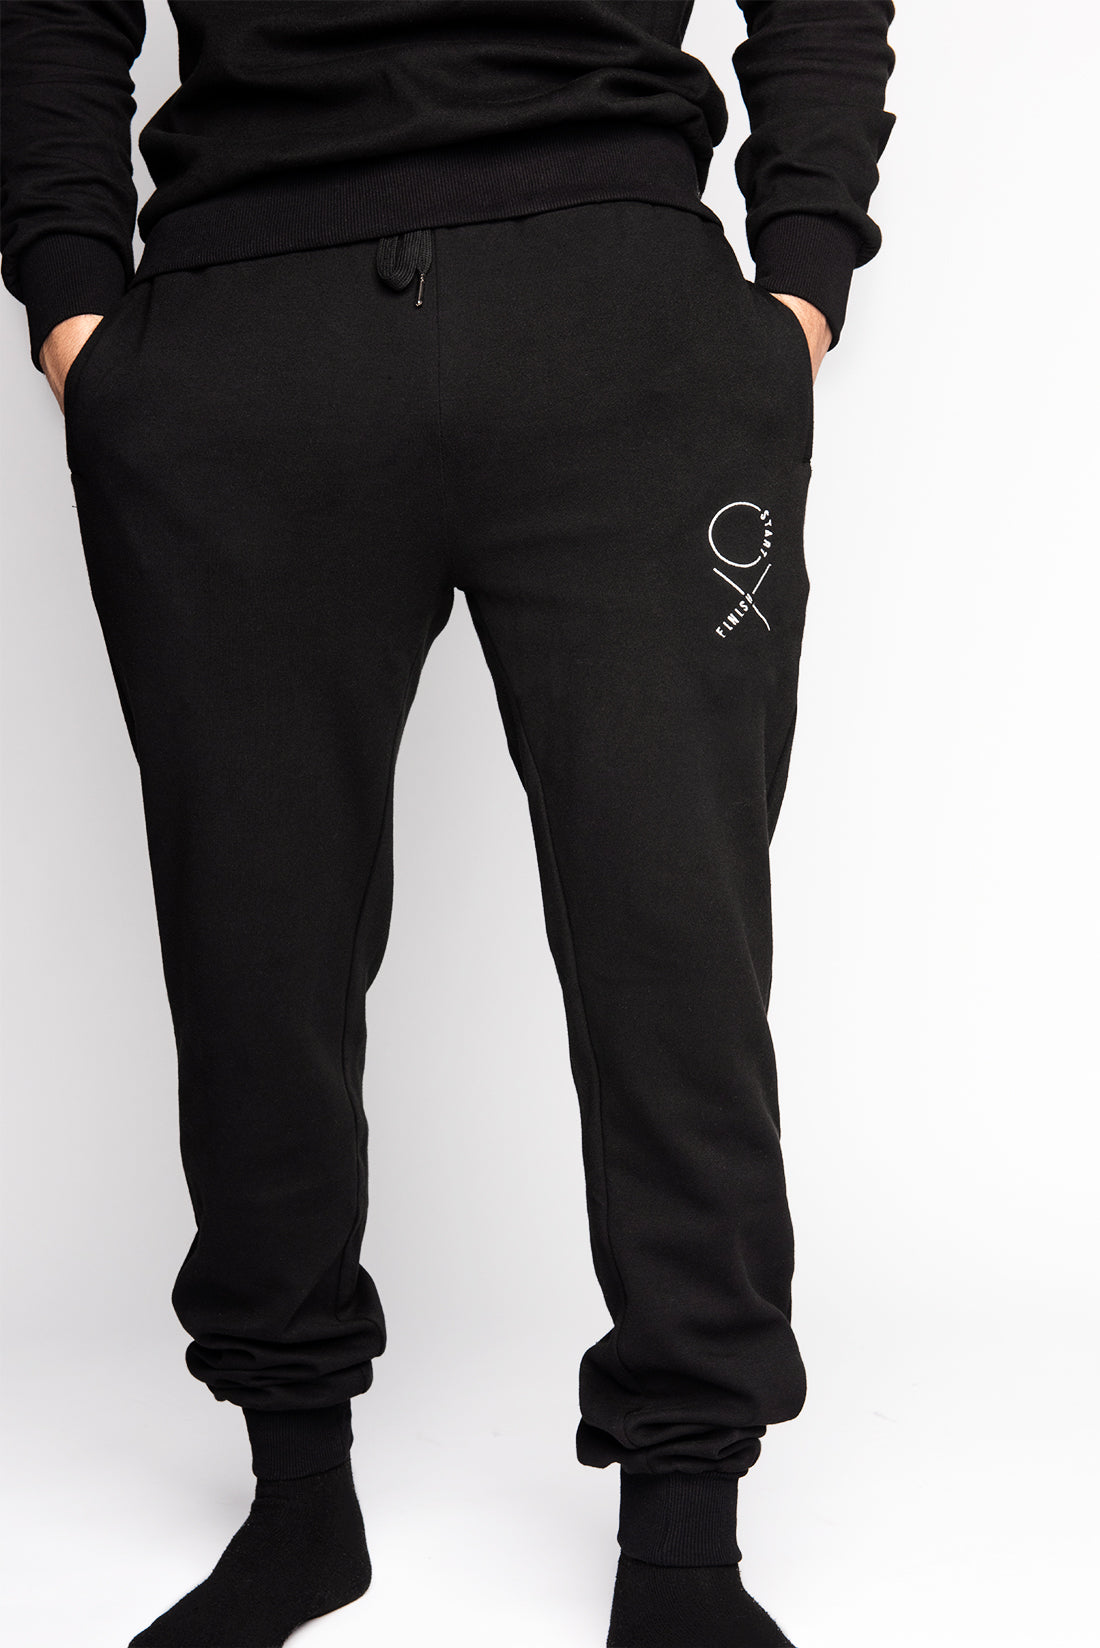 OX Emblem Sweat Pants